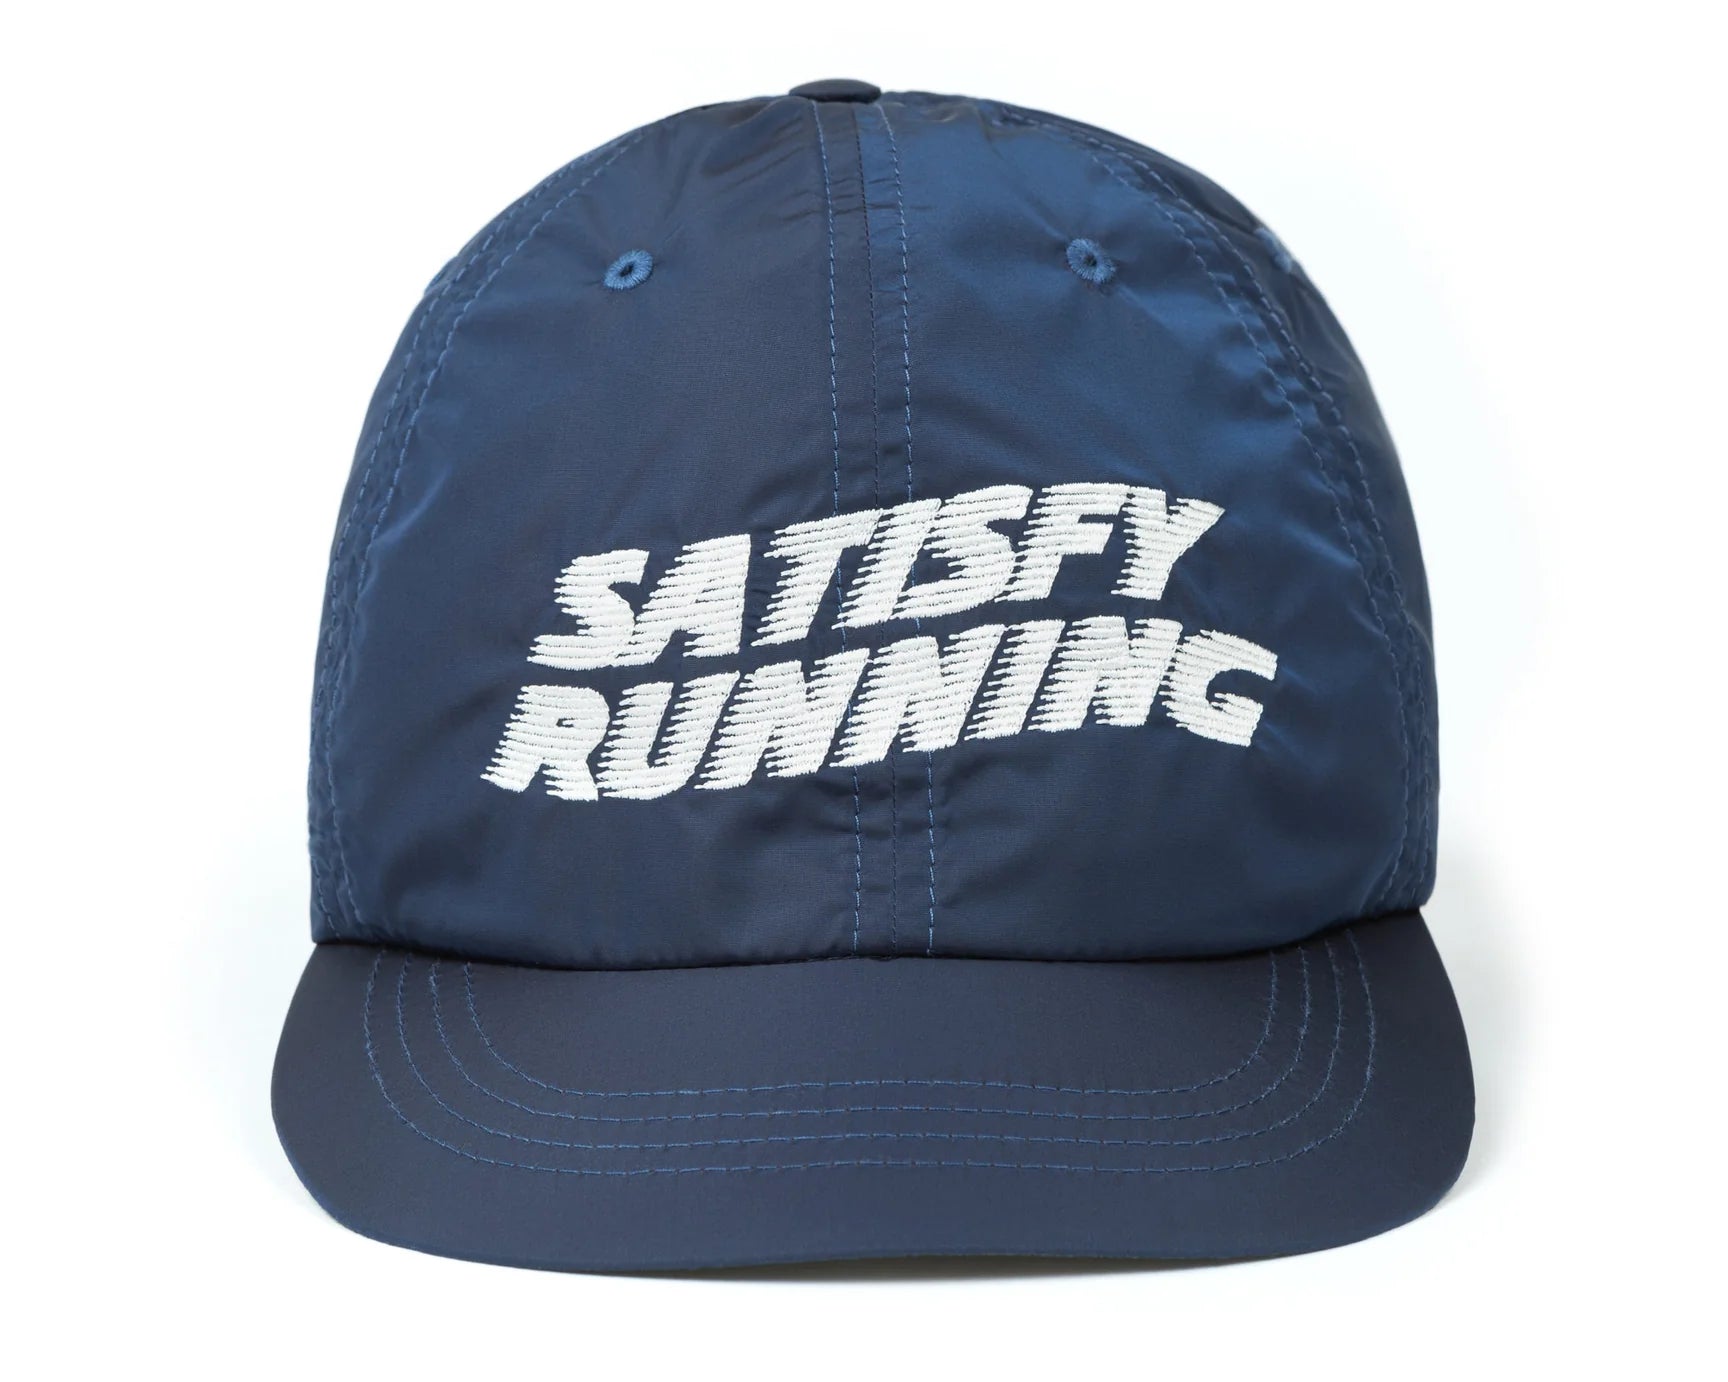 SATISFY - FliteSilk Running Cap - Obsidian - Space Camp